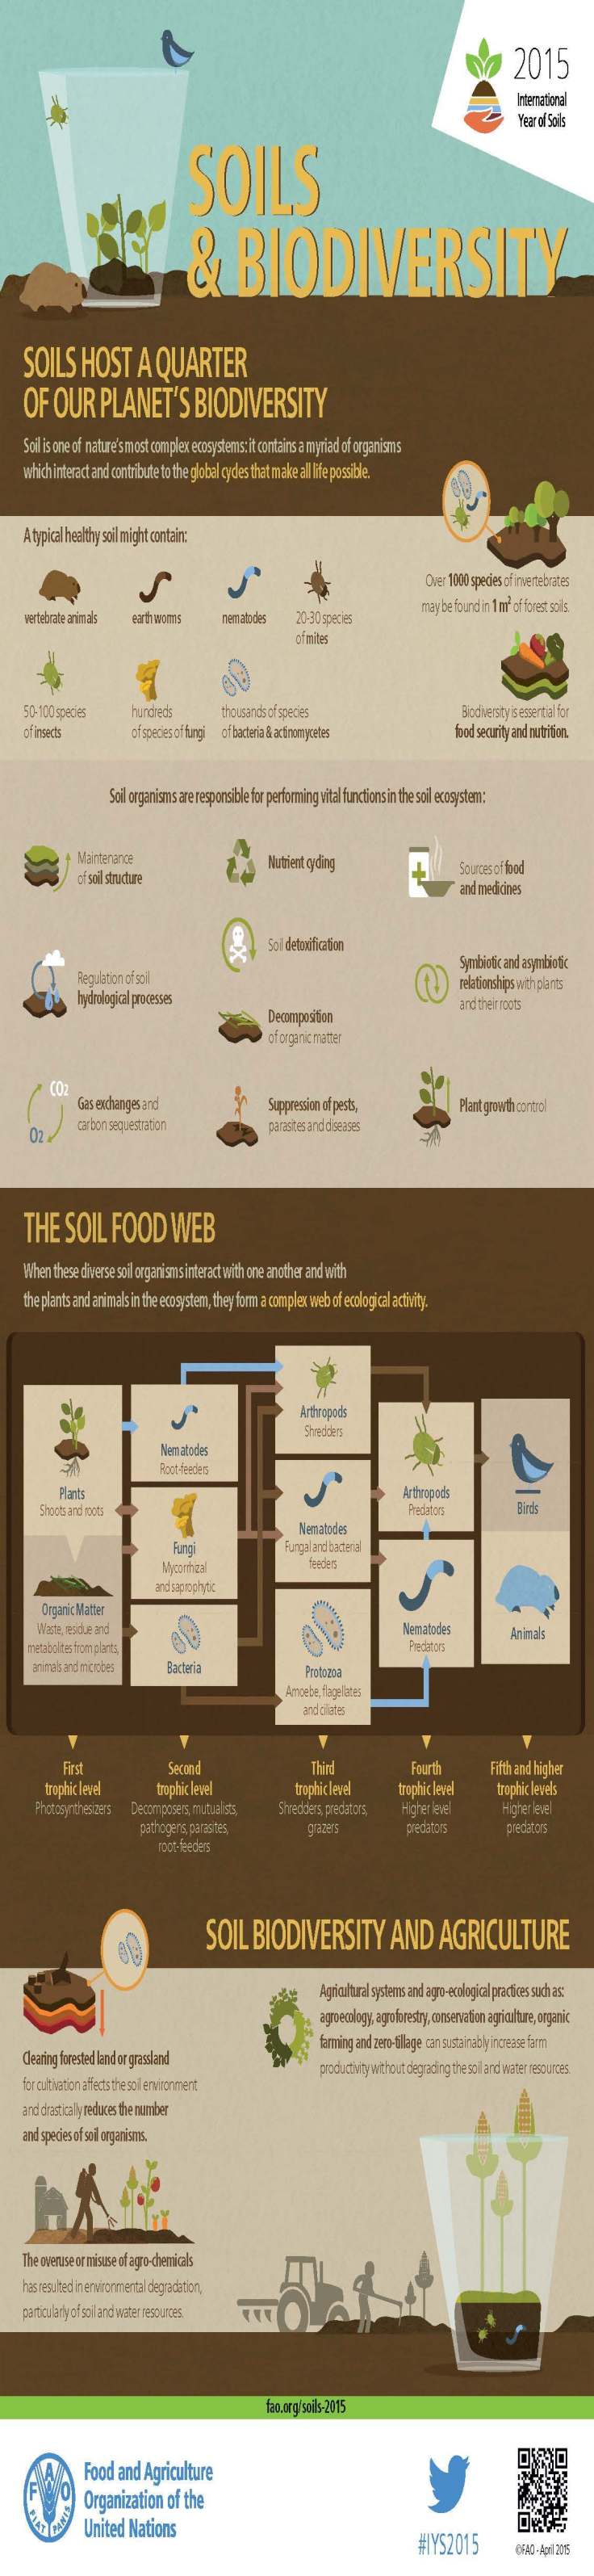 soils-and-biodiversity-infographic1